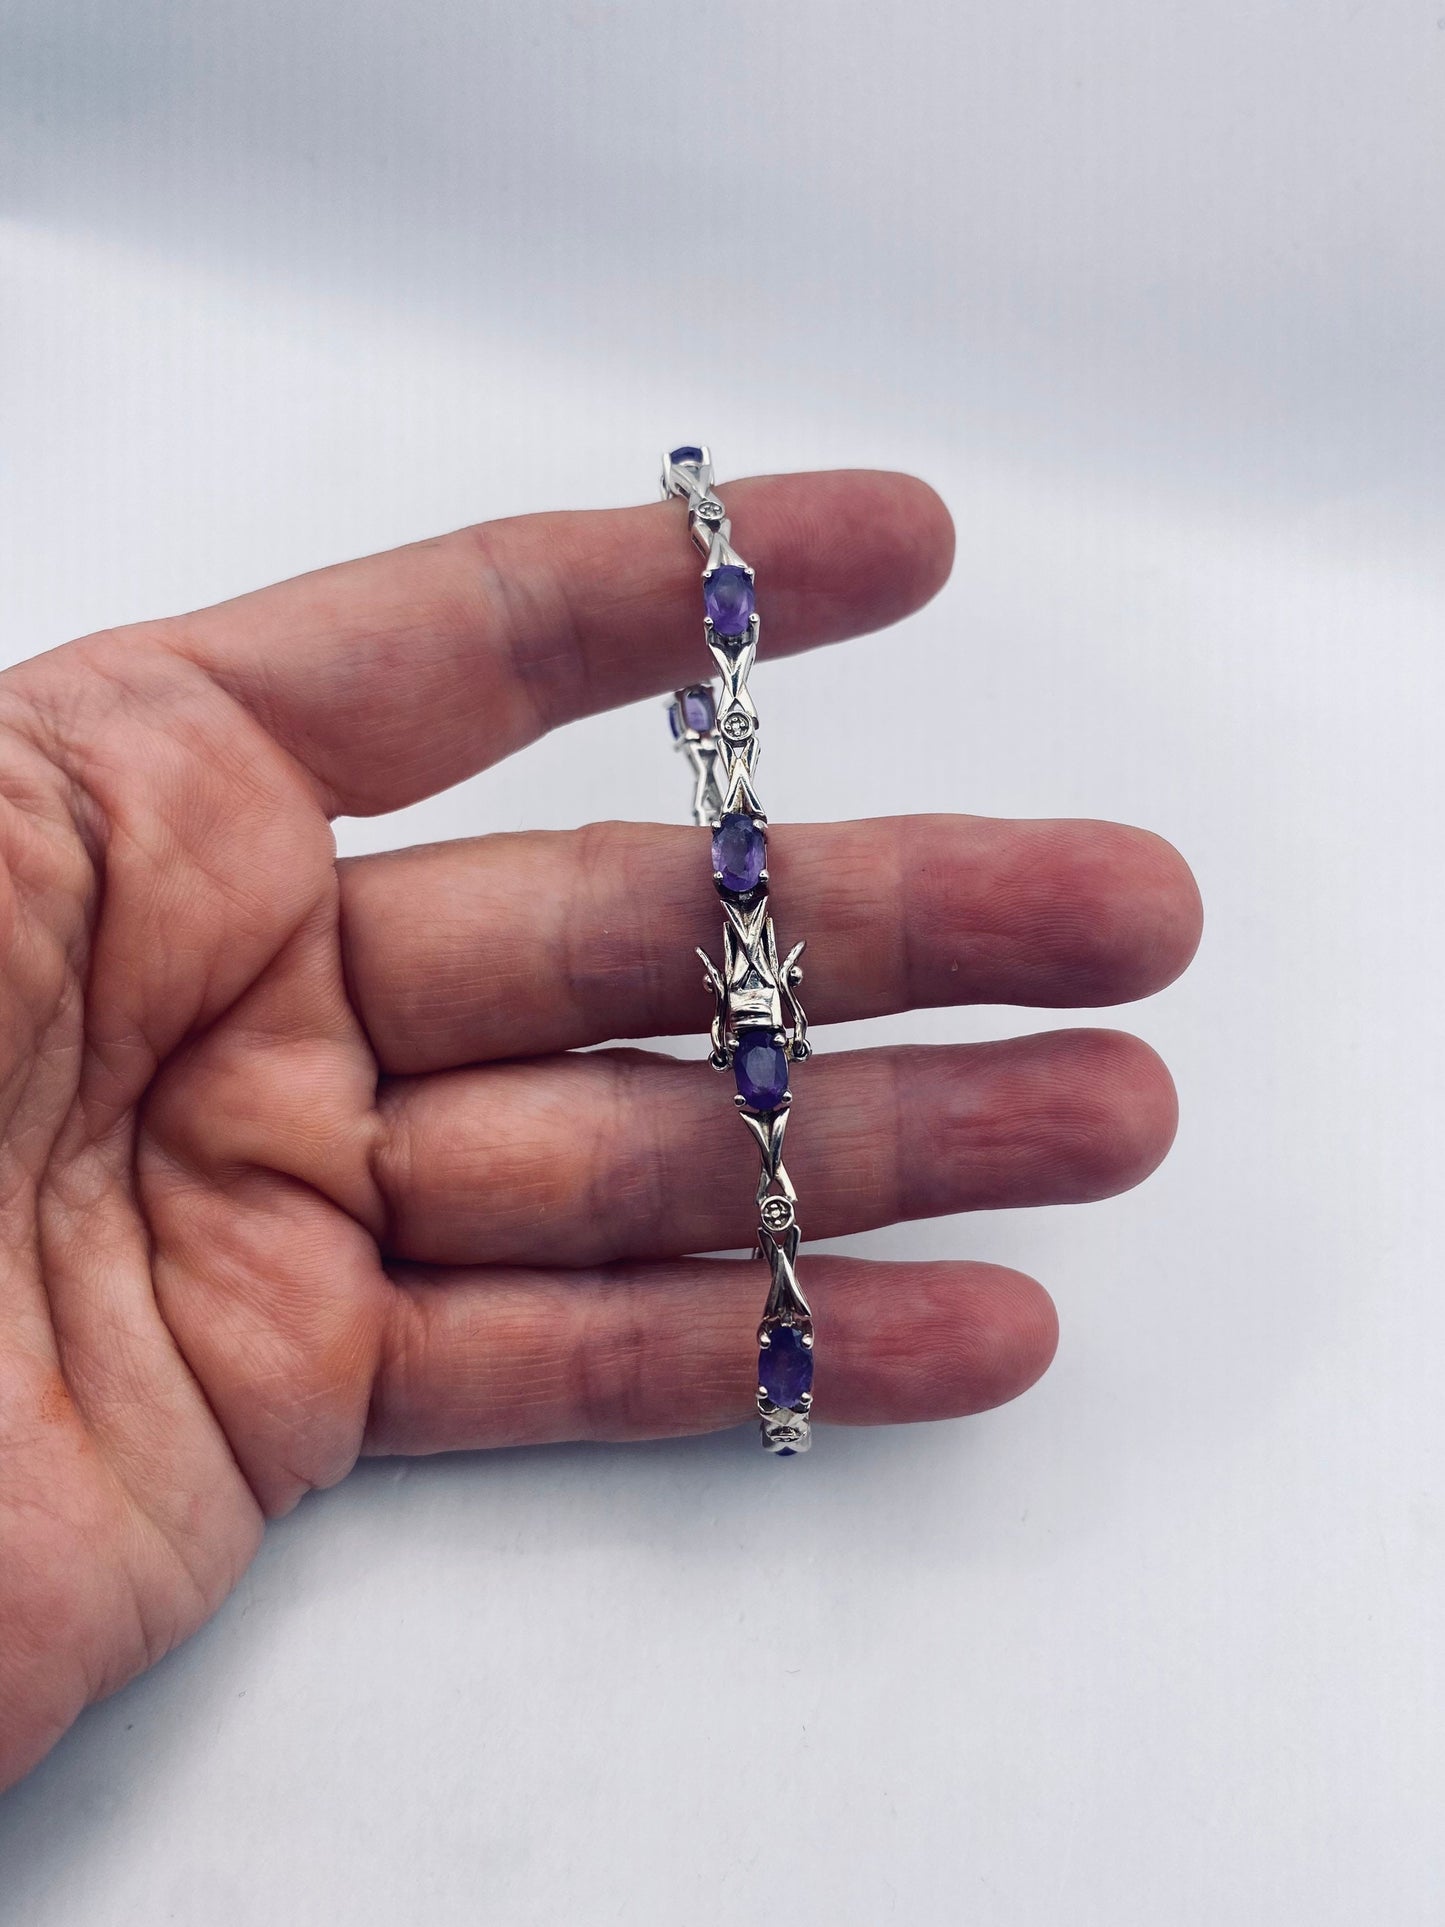 Vintage Amethyst Bracelet 925 Sterling Silver Purple Deco